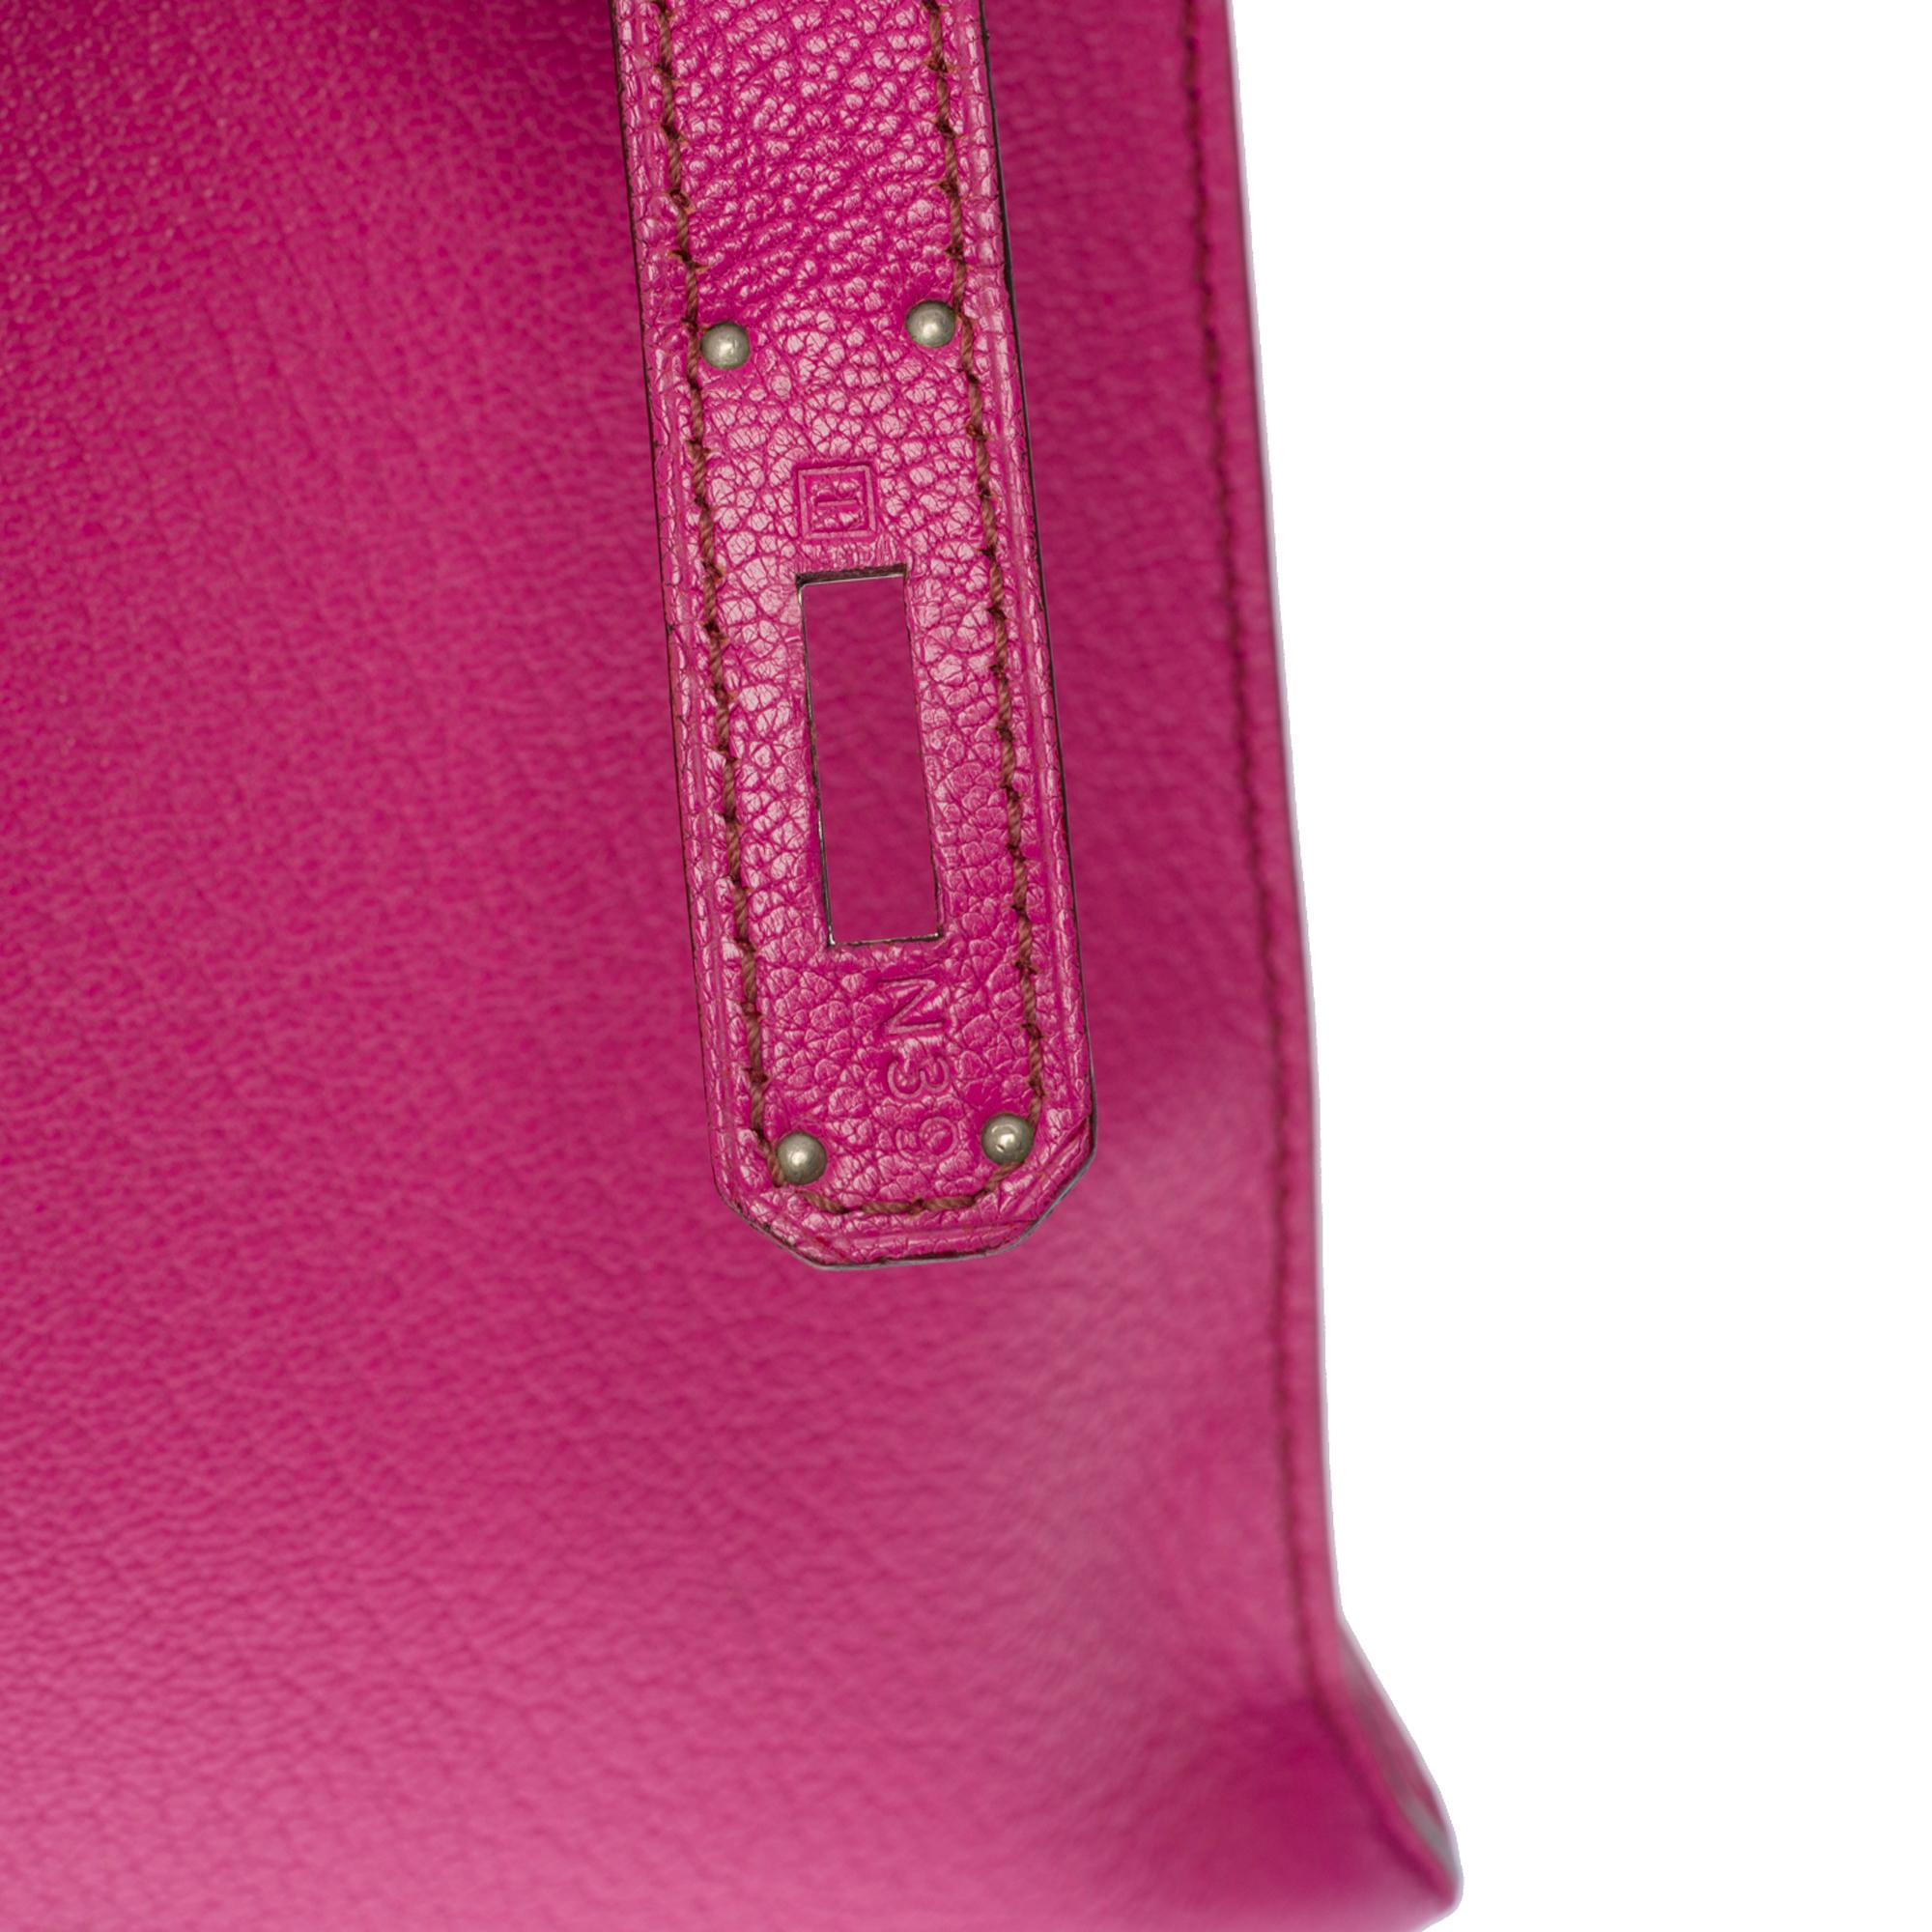 Women's Hermès Kelly 32 handbag strap in Fuchsia Mysore Chèvre leather, silver hardware